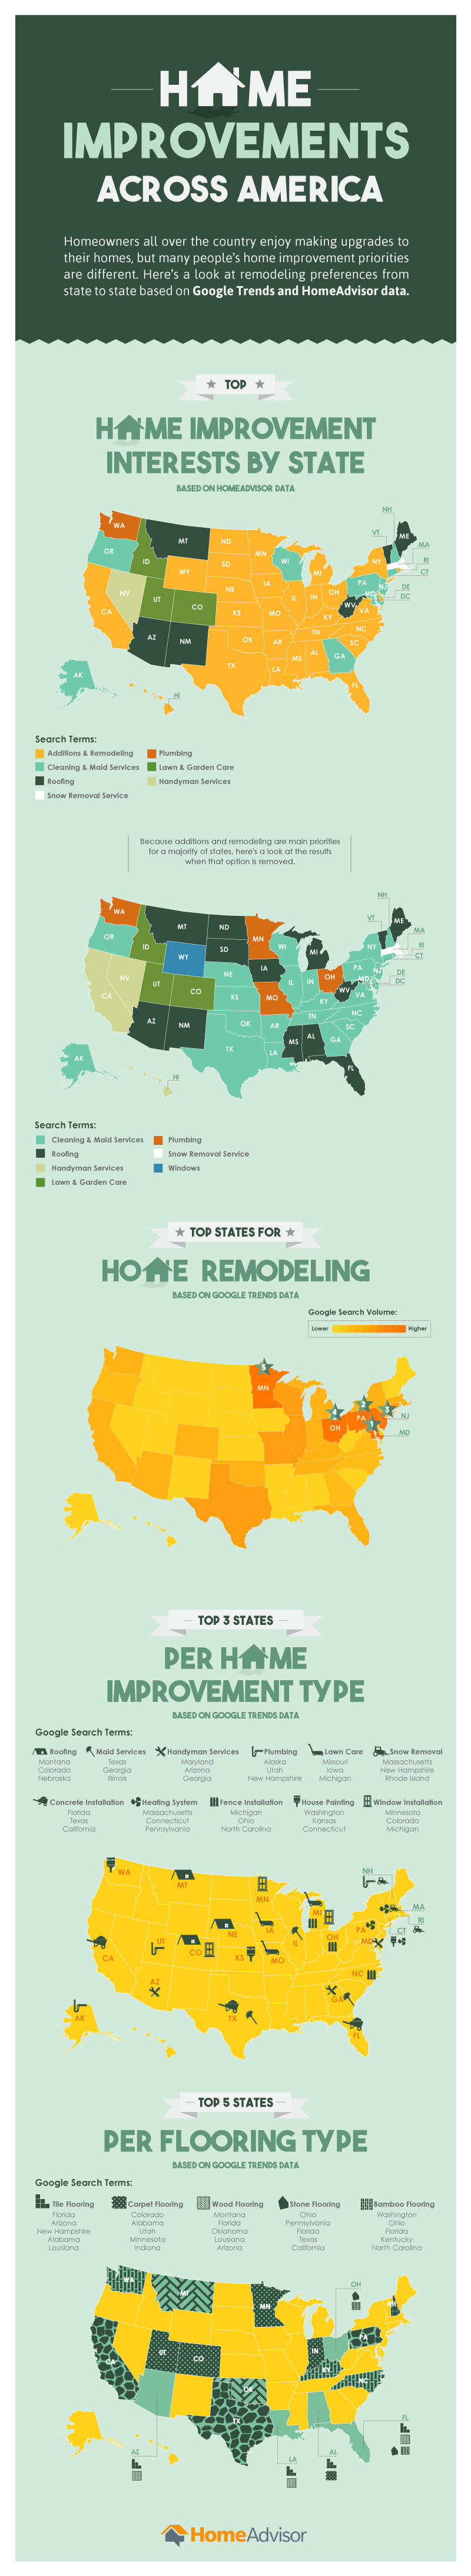 Home Improvements Across America